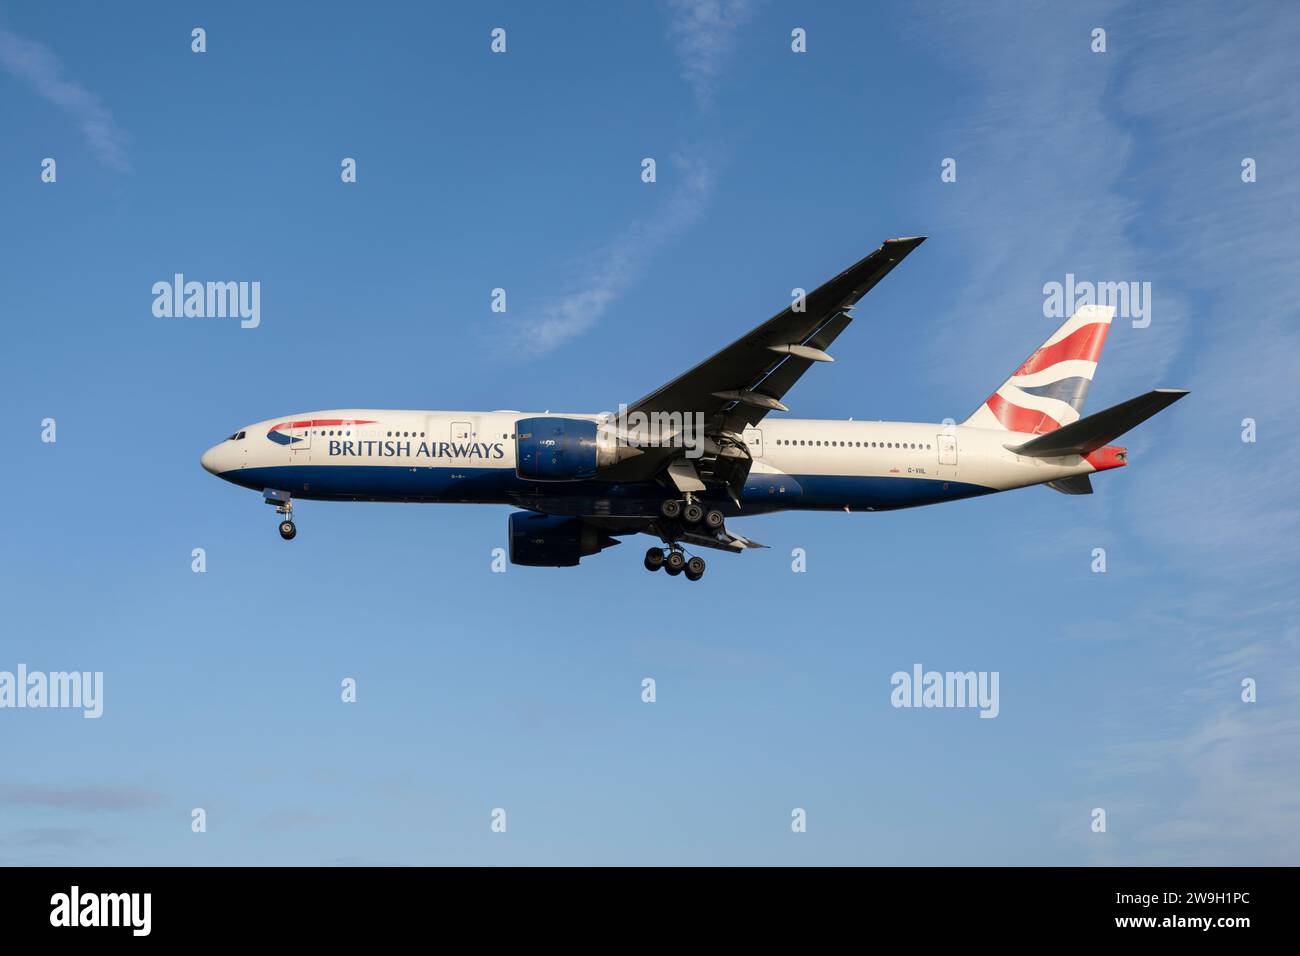 British Airways Boeing 777 Passenger Jet Airplane Registration G-VIIL on short finals for a landing on runway 27L at Heathrow Airport Stock Photo